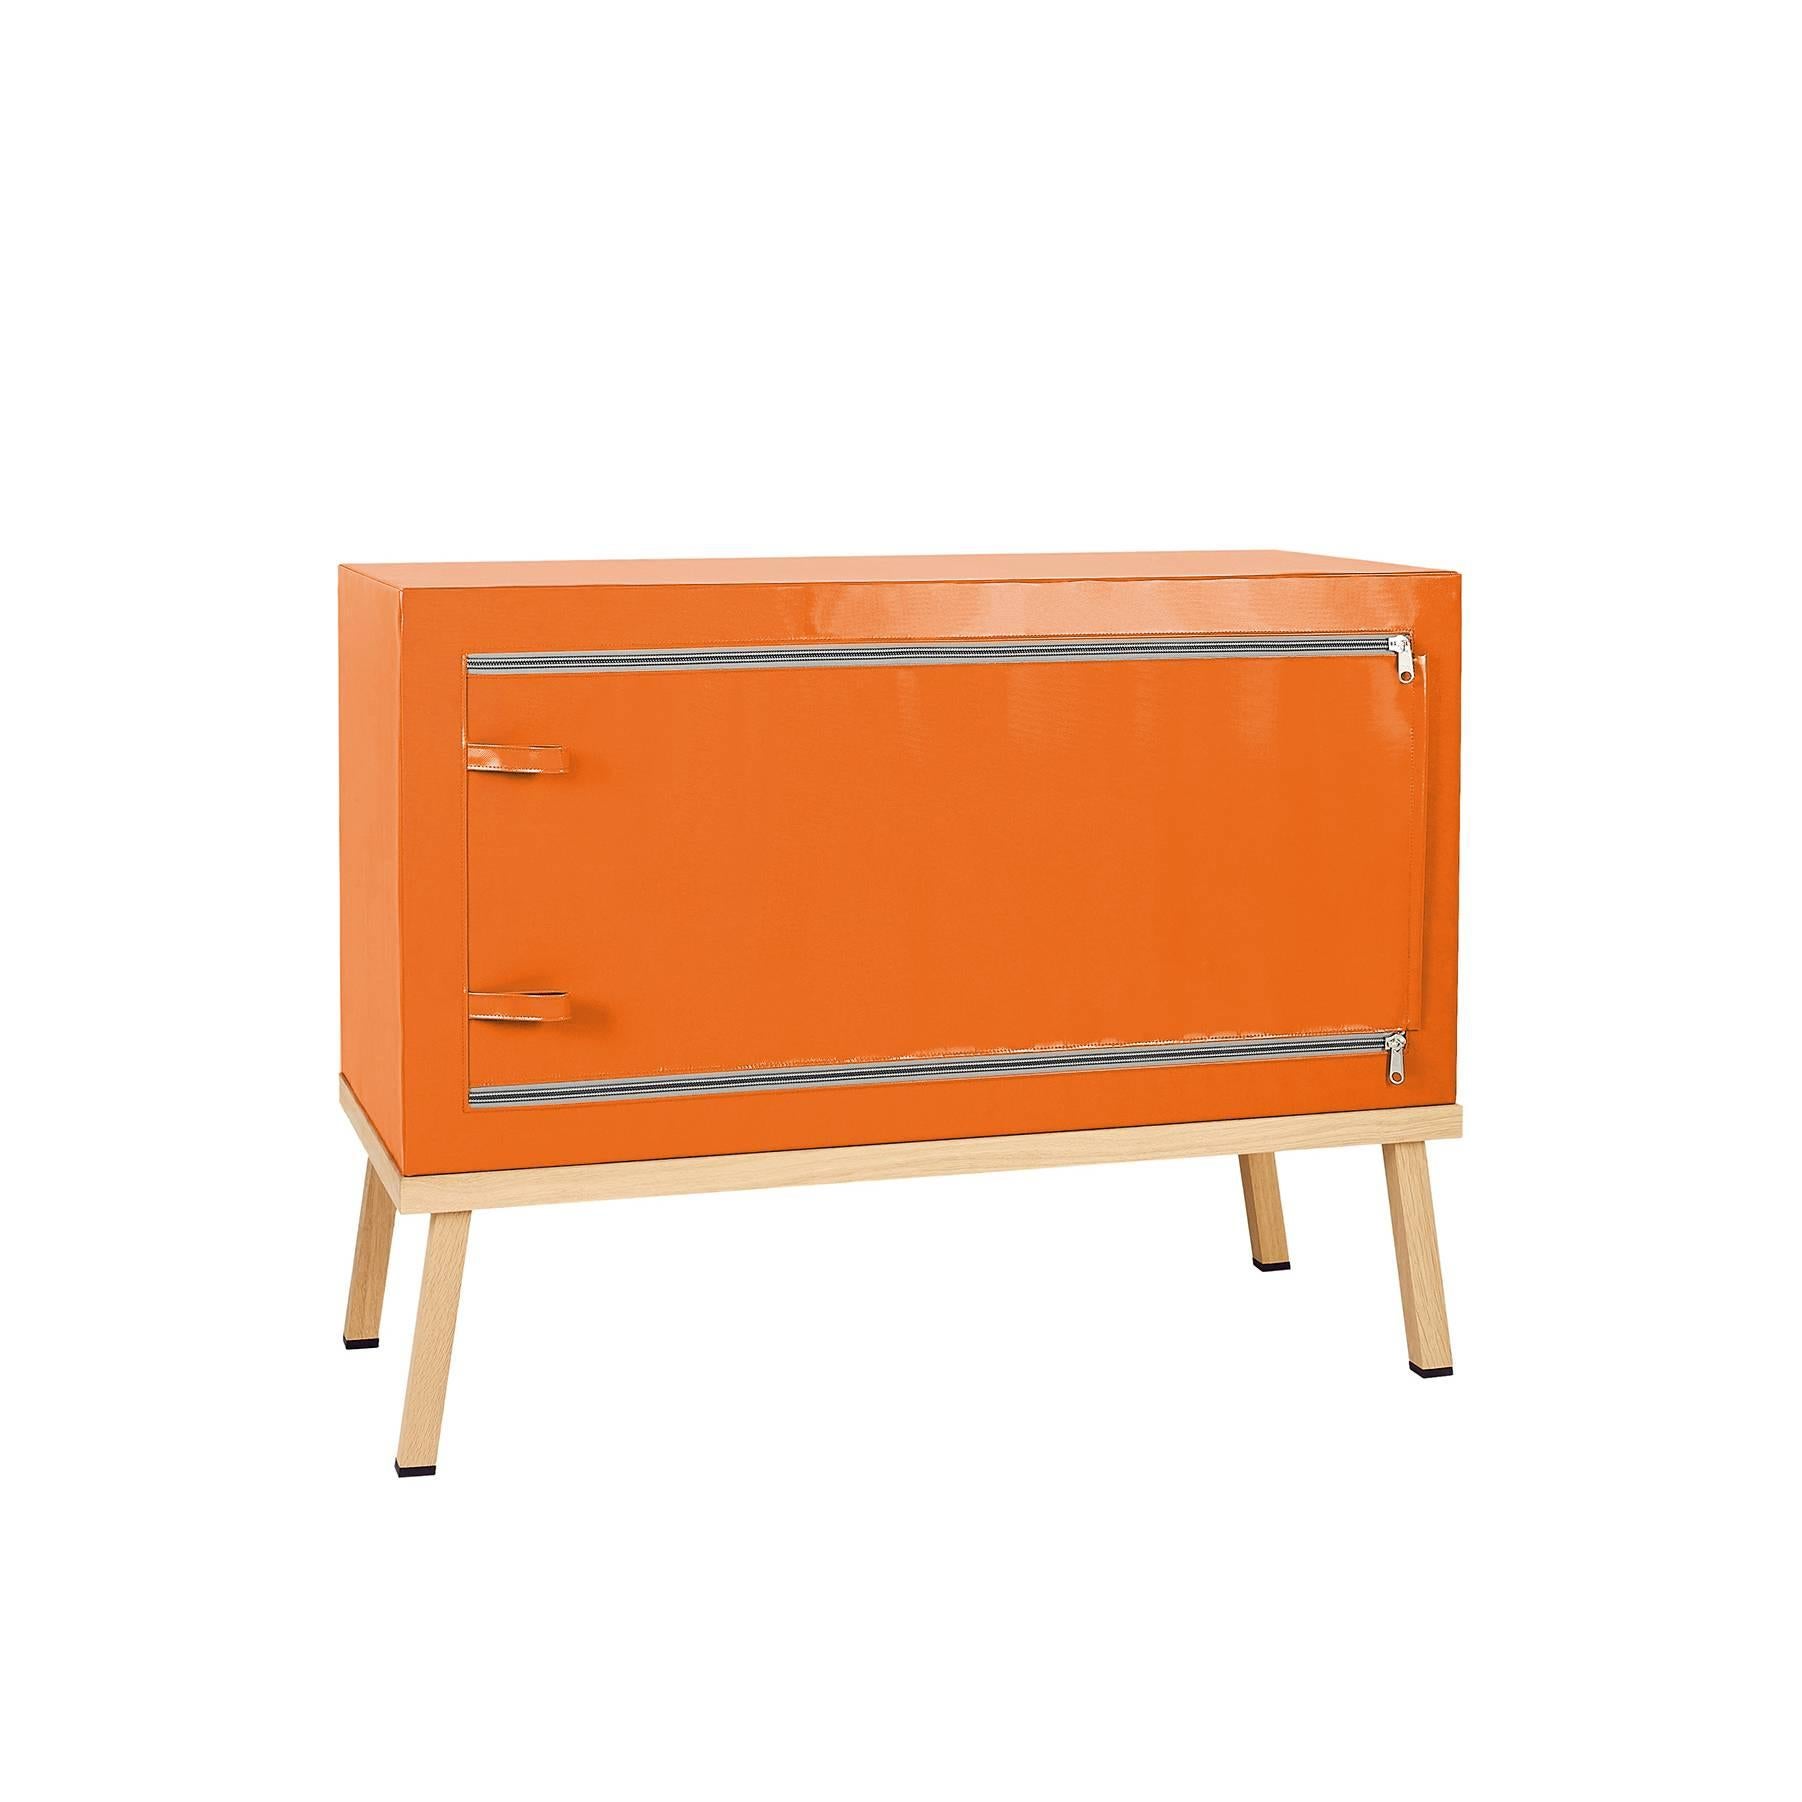 Visser and Meijwaard Truecolors Dresser or Credenza in Orange PVC Cloth 

Designed by Visser en Meijwaard
Contemporary, Netherlands, 2015
PVC cloth, oakwood, rubber
Measure: H 33.25 in, W 42.75 in, D 19.25 in

Lead time 8-10 weeks

Available in